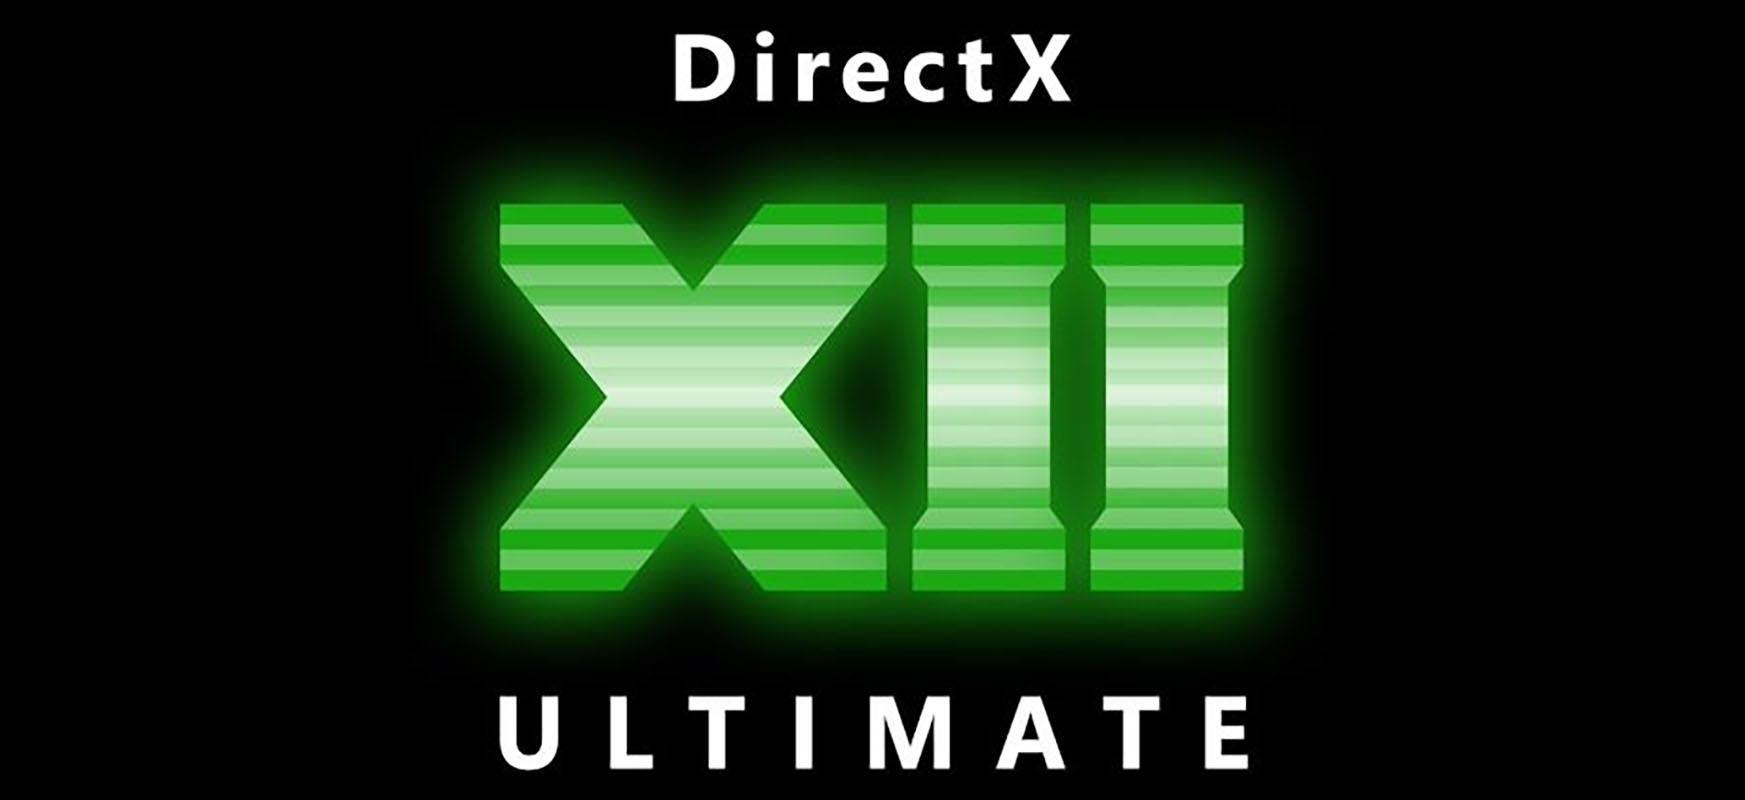 directx 12 latest